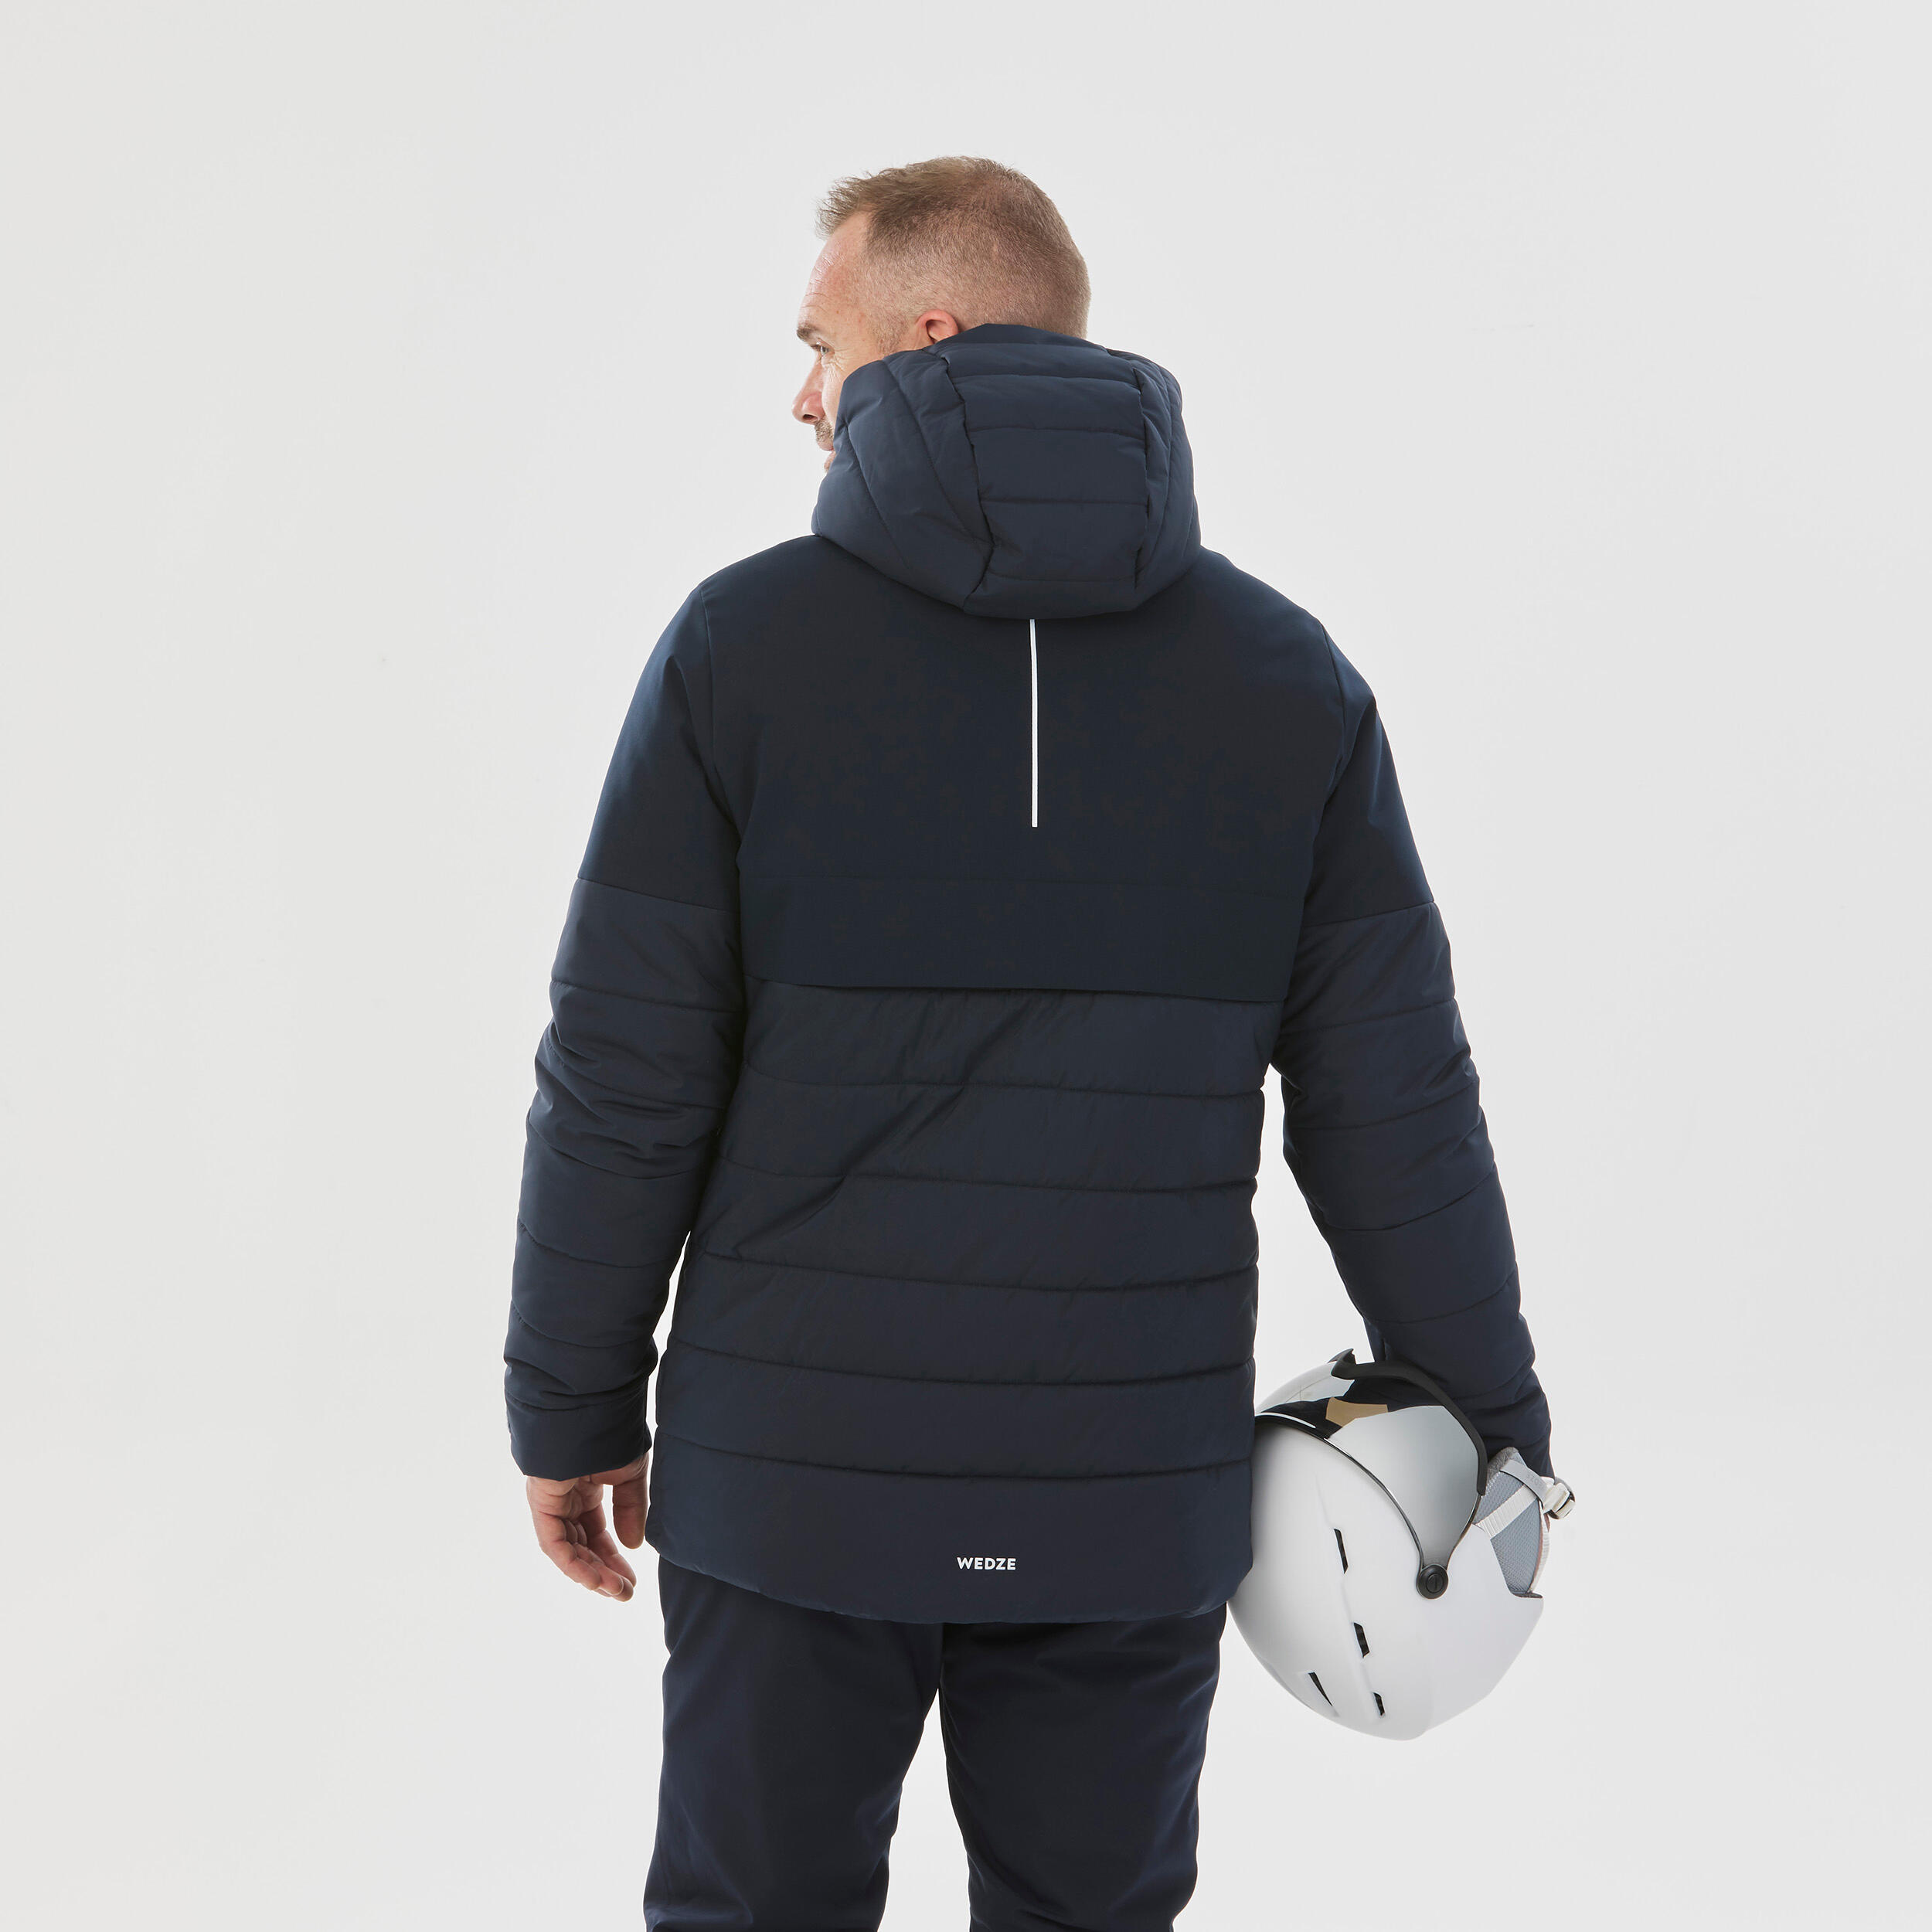 Men’s warm ski and snowboard jacket  100 - Navy blue 5/11